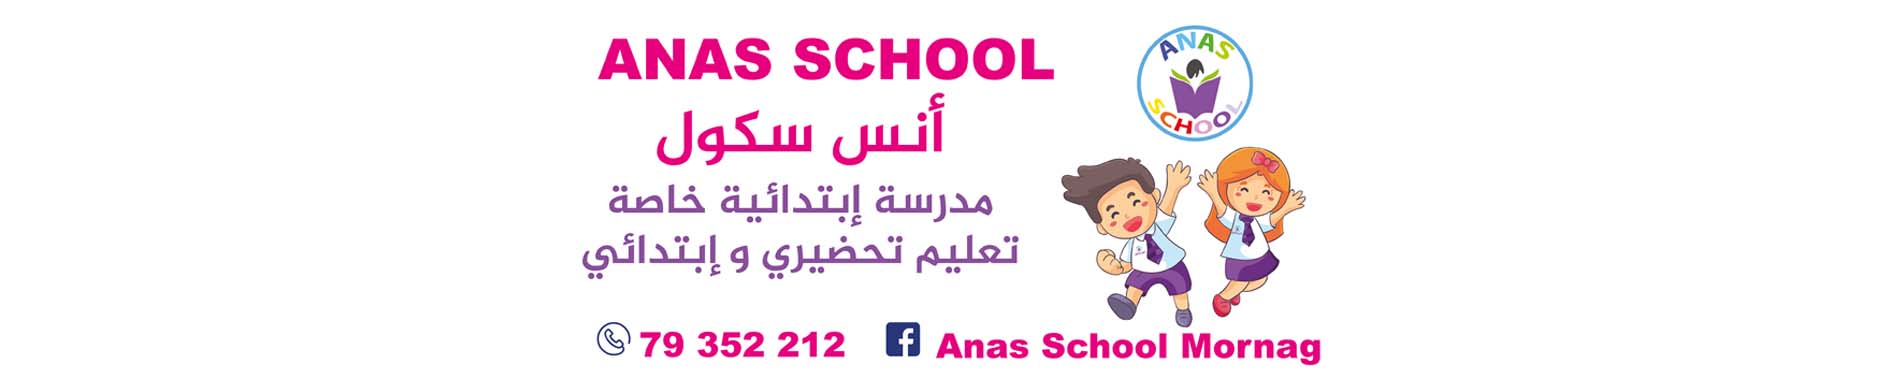 Anas School